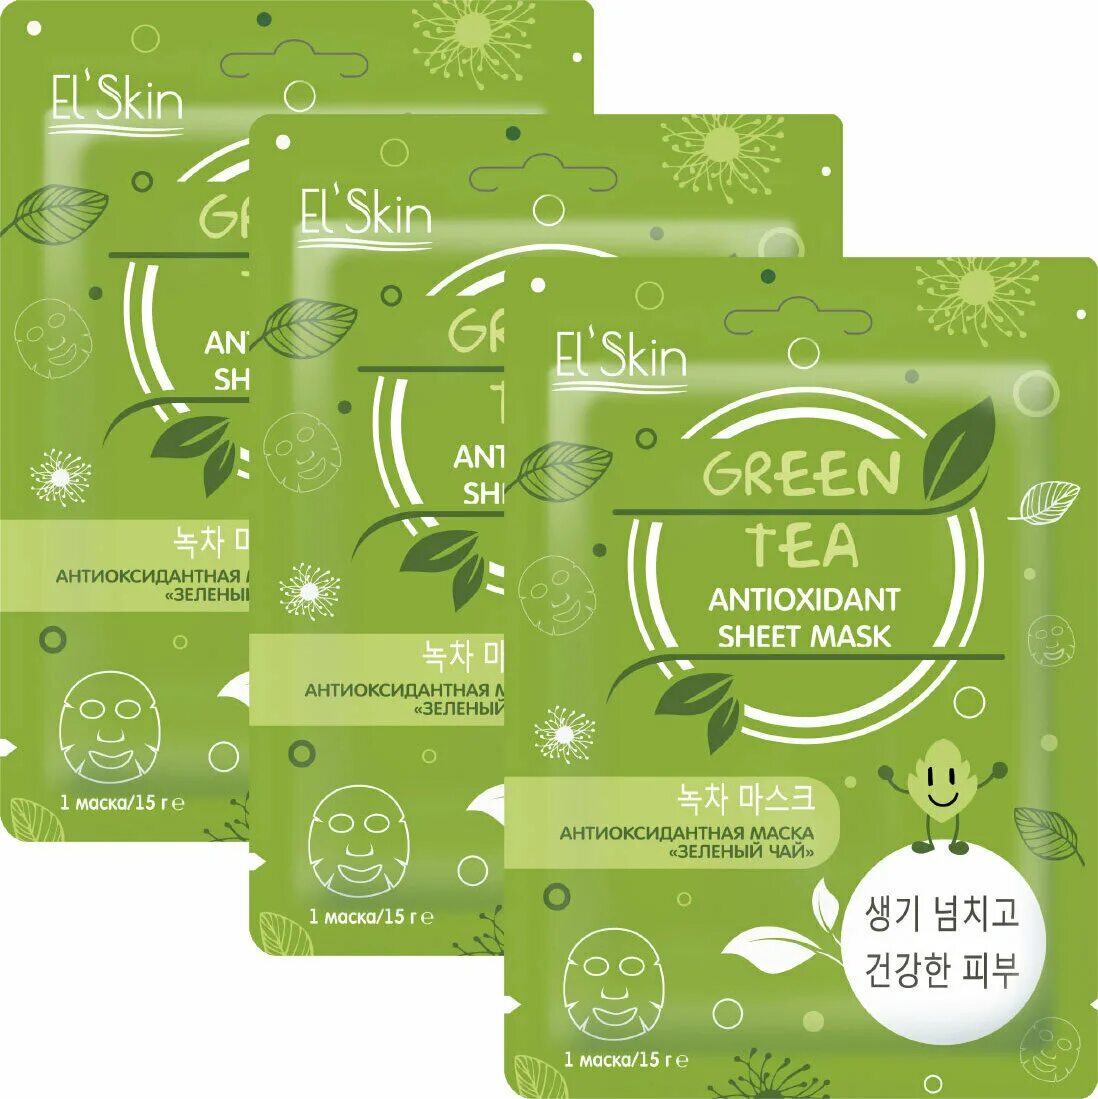 El skin маска. ELSKIN тканевая маска зеленый чай. El' Skin es-902 антиоксидантная маска "зеленый чай". Маска для лица тканевая ELSKIN зеленый микс 15 мл.